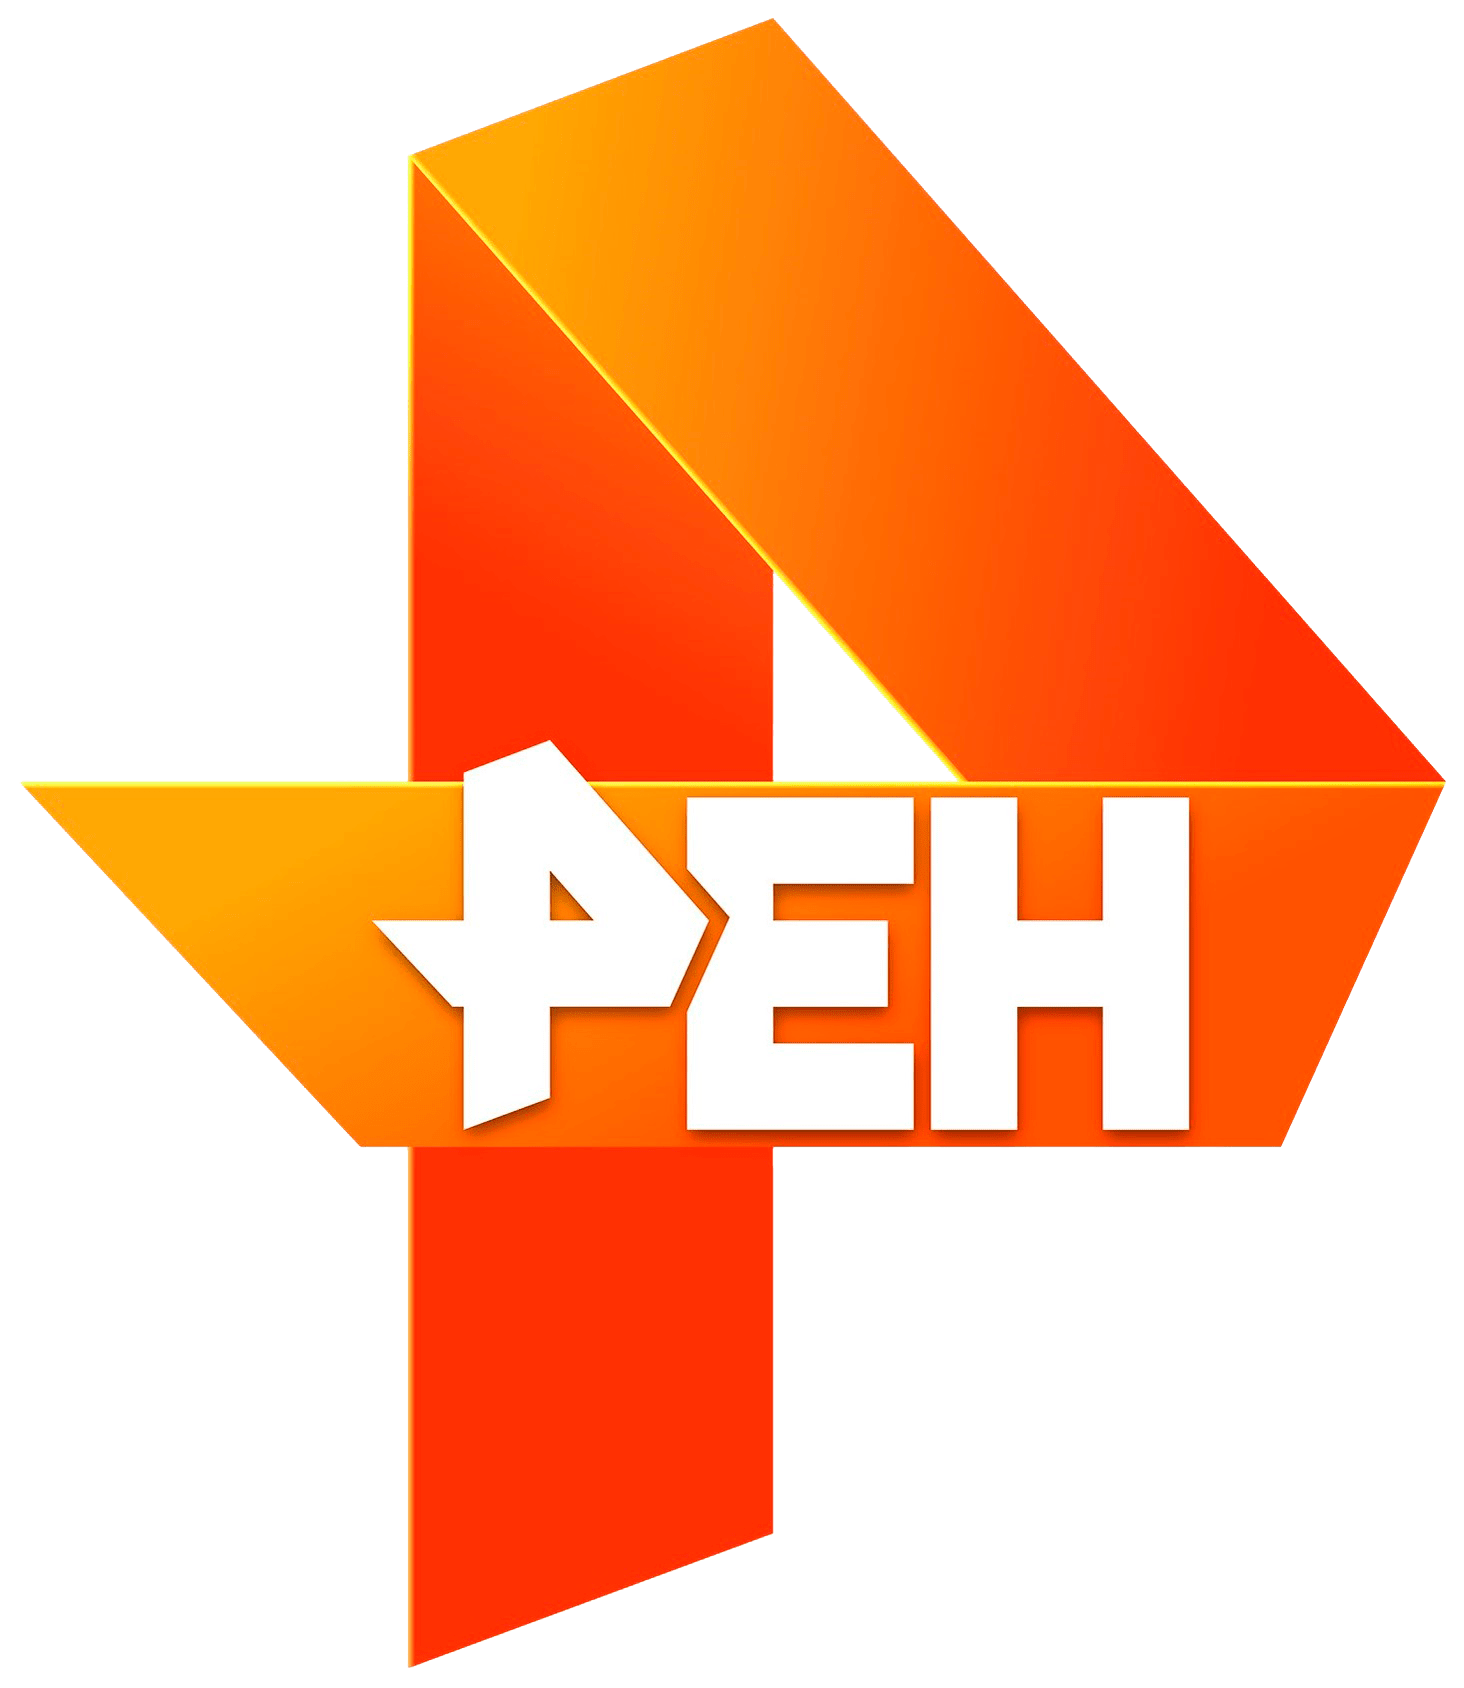 Раземщение рекламы РЕН ТВ, г.Волгоград